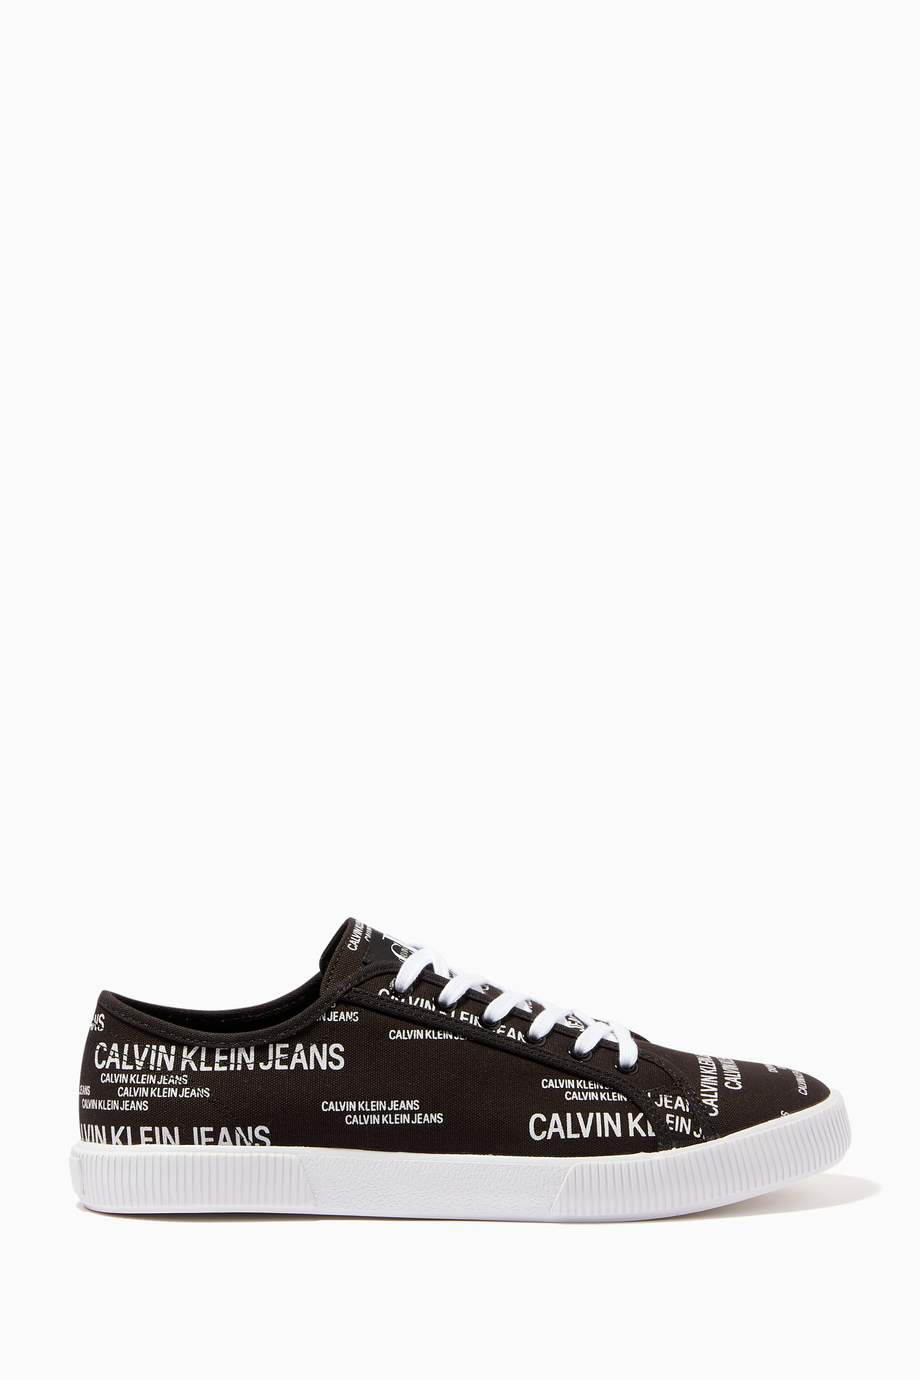 Shop Calvin Klein Jeans Black Canvas Vulcanized Sneakers for Men ...